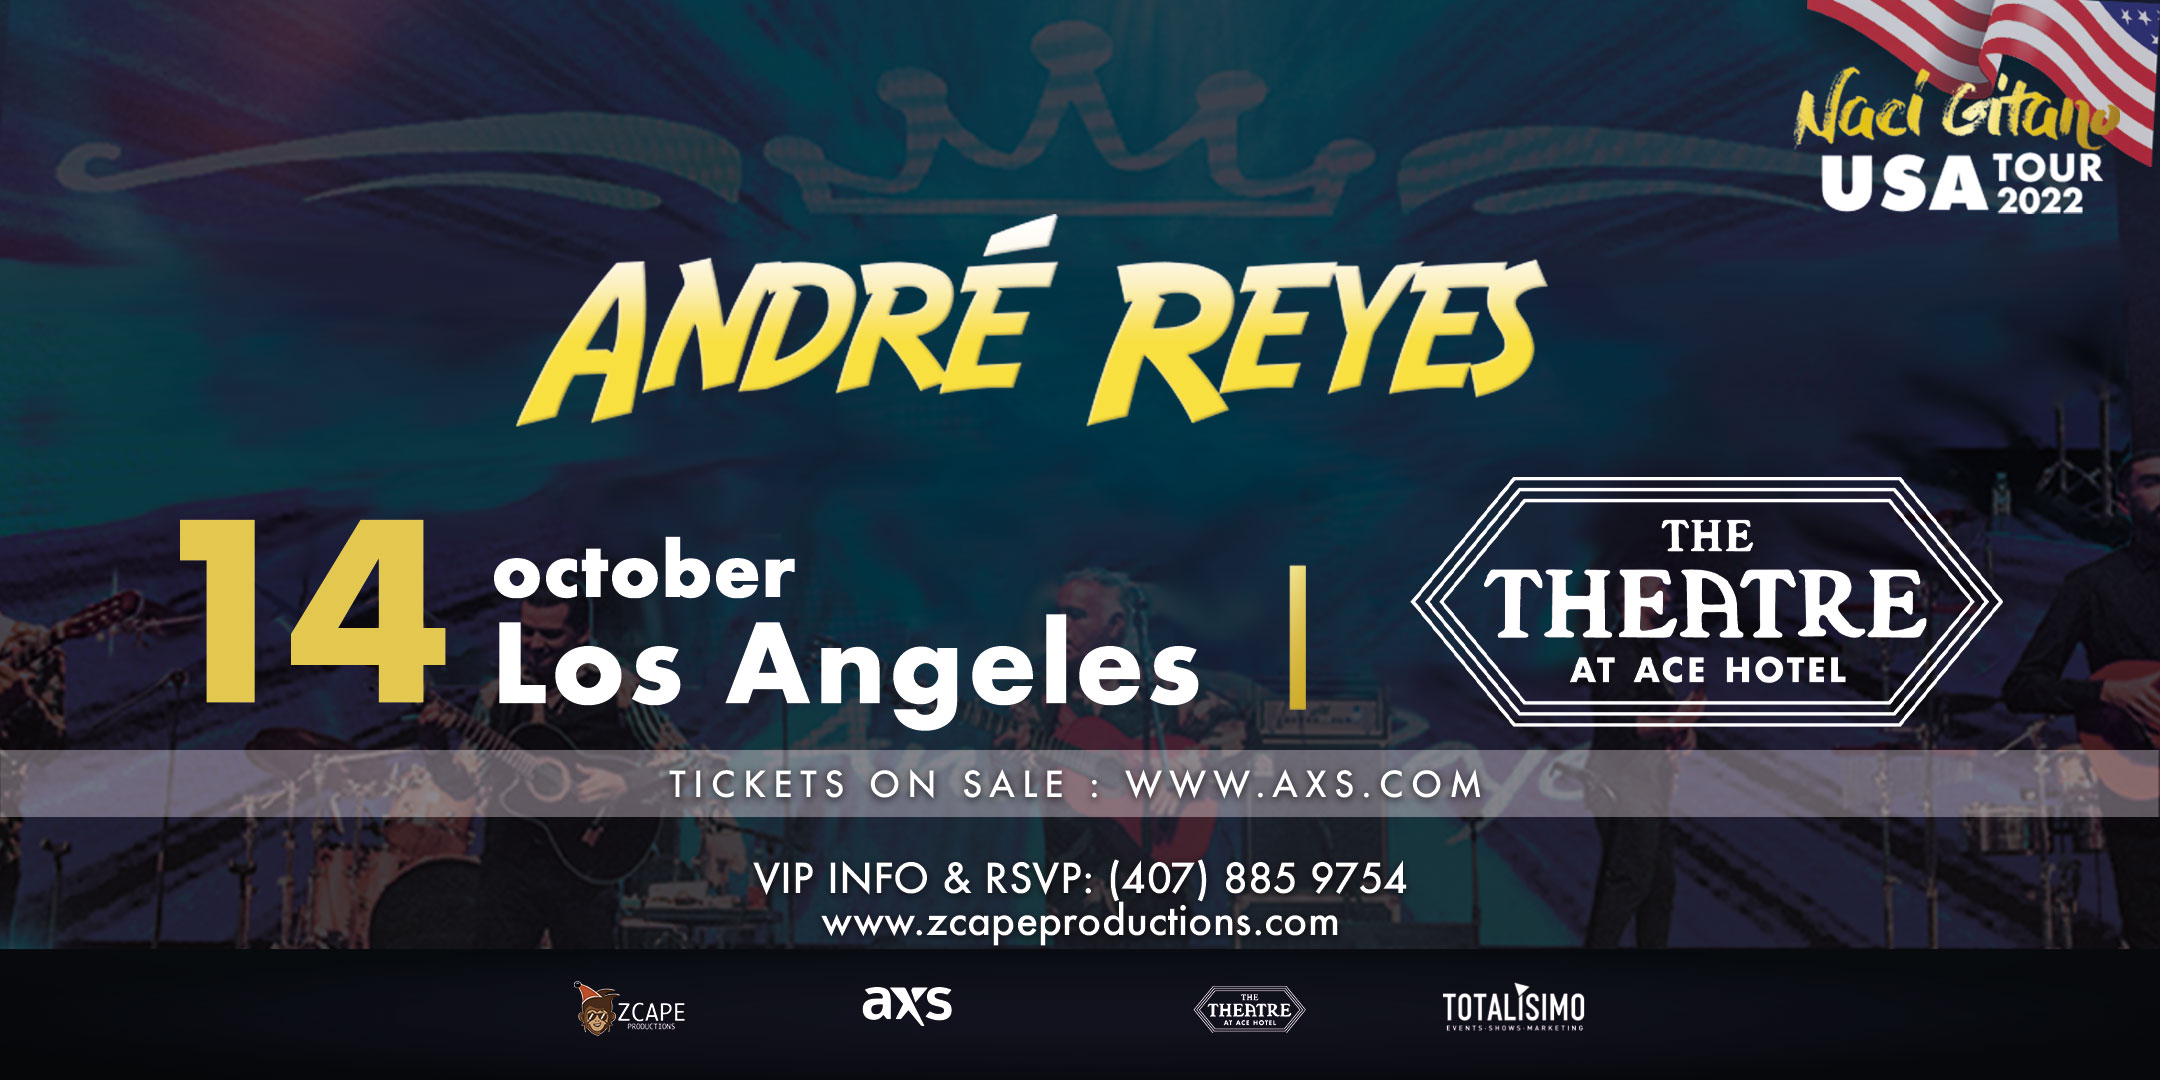 Andre Reyes promo - October 14